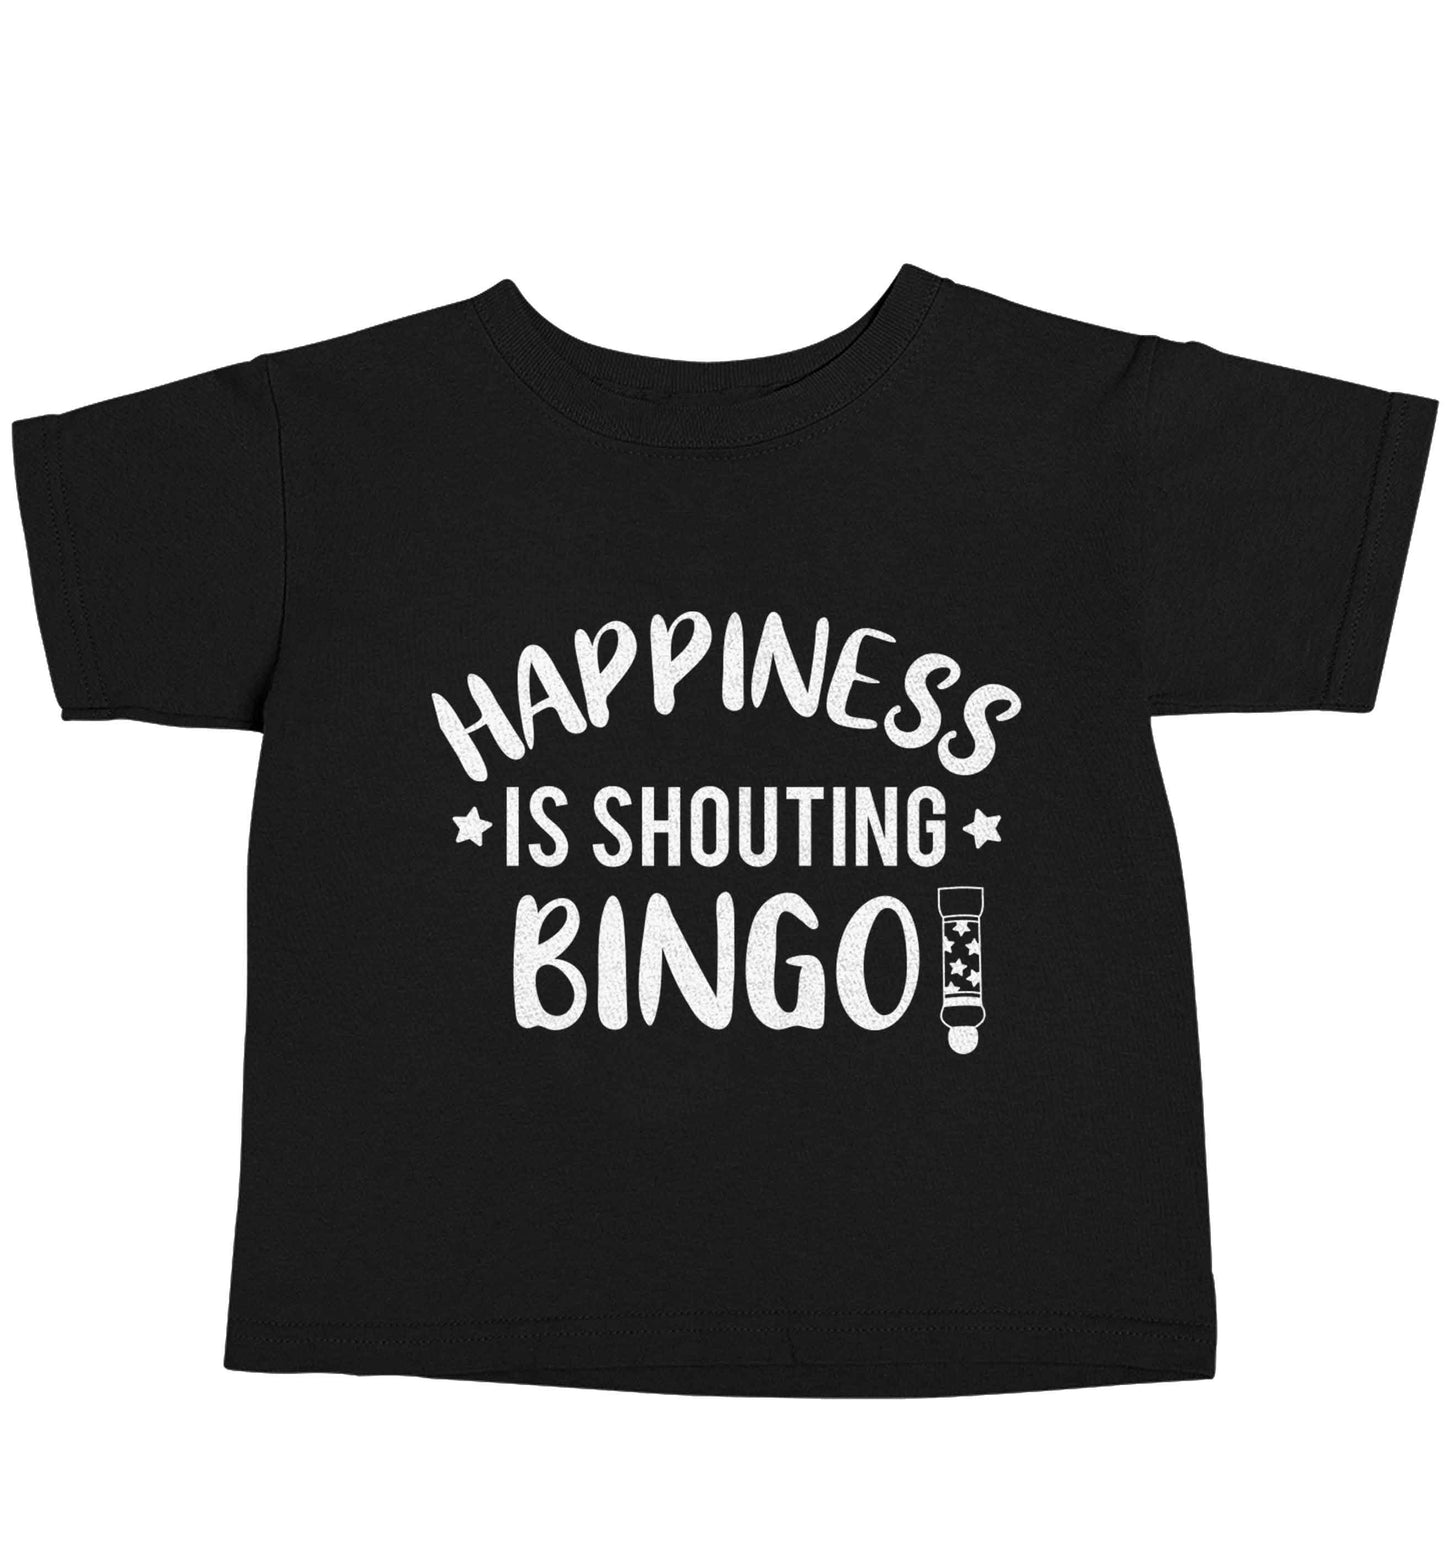 Happiness is shouting bingo! Black baby toddler Tshirt 2 years